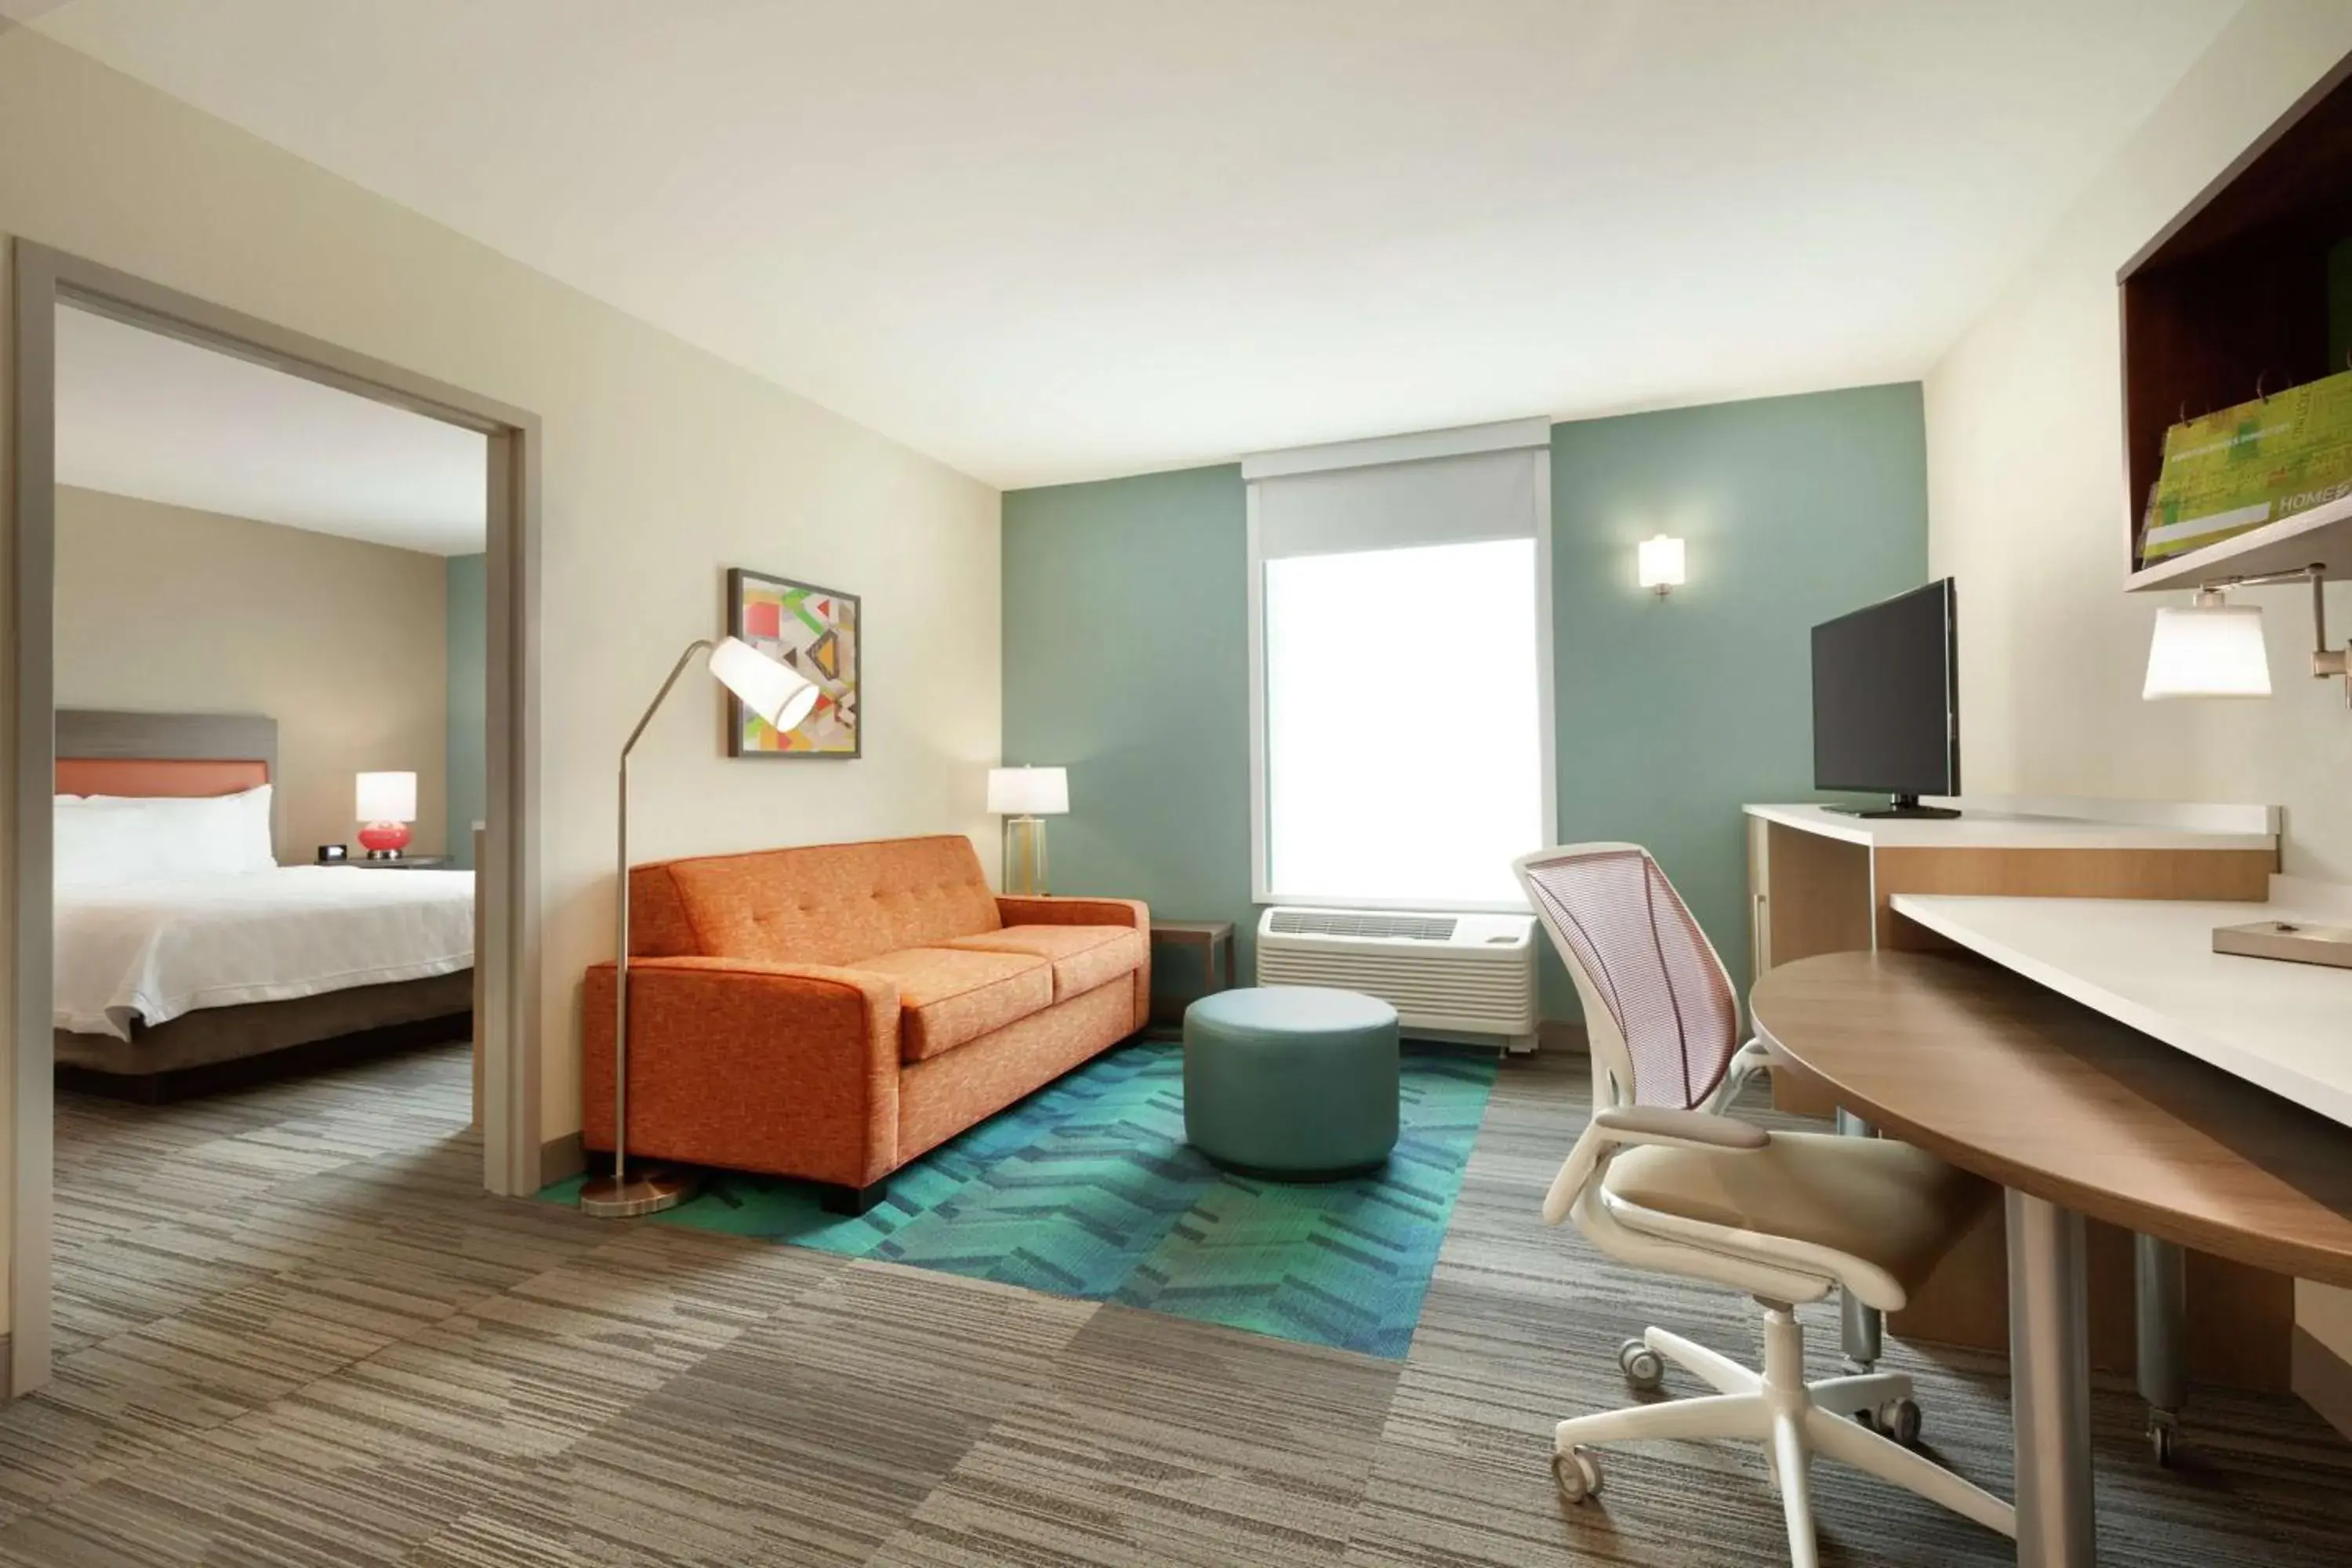 Bedroom in Home2 Suites by Hilton Sarasota - Bradenton Airport, FL